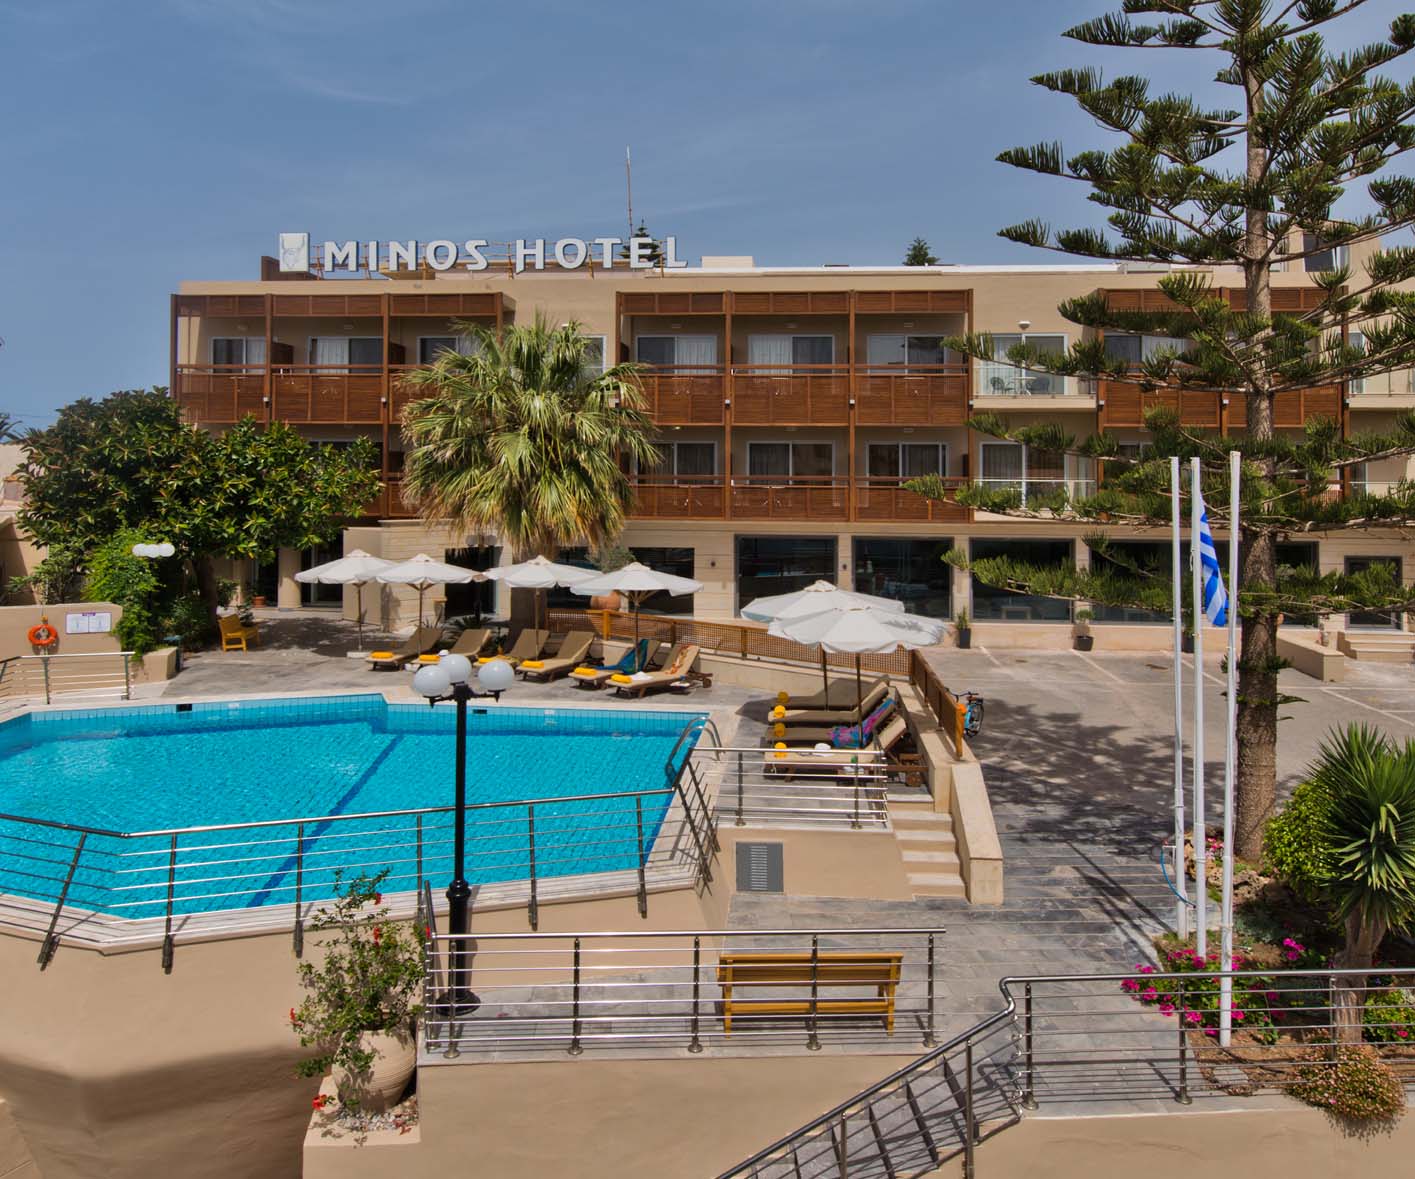 Minos Hotel - Rethymnon, Crete - On The Beach